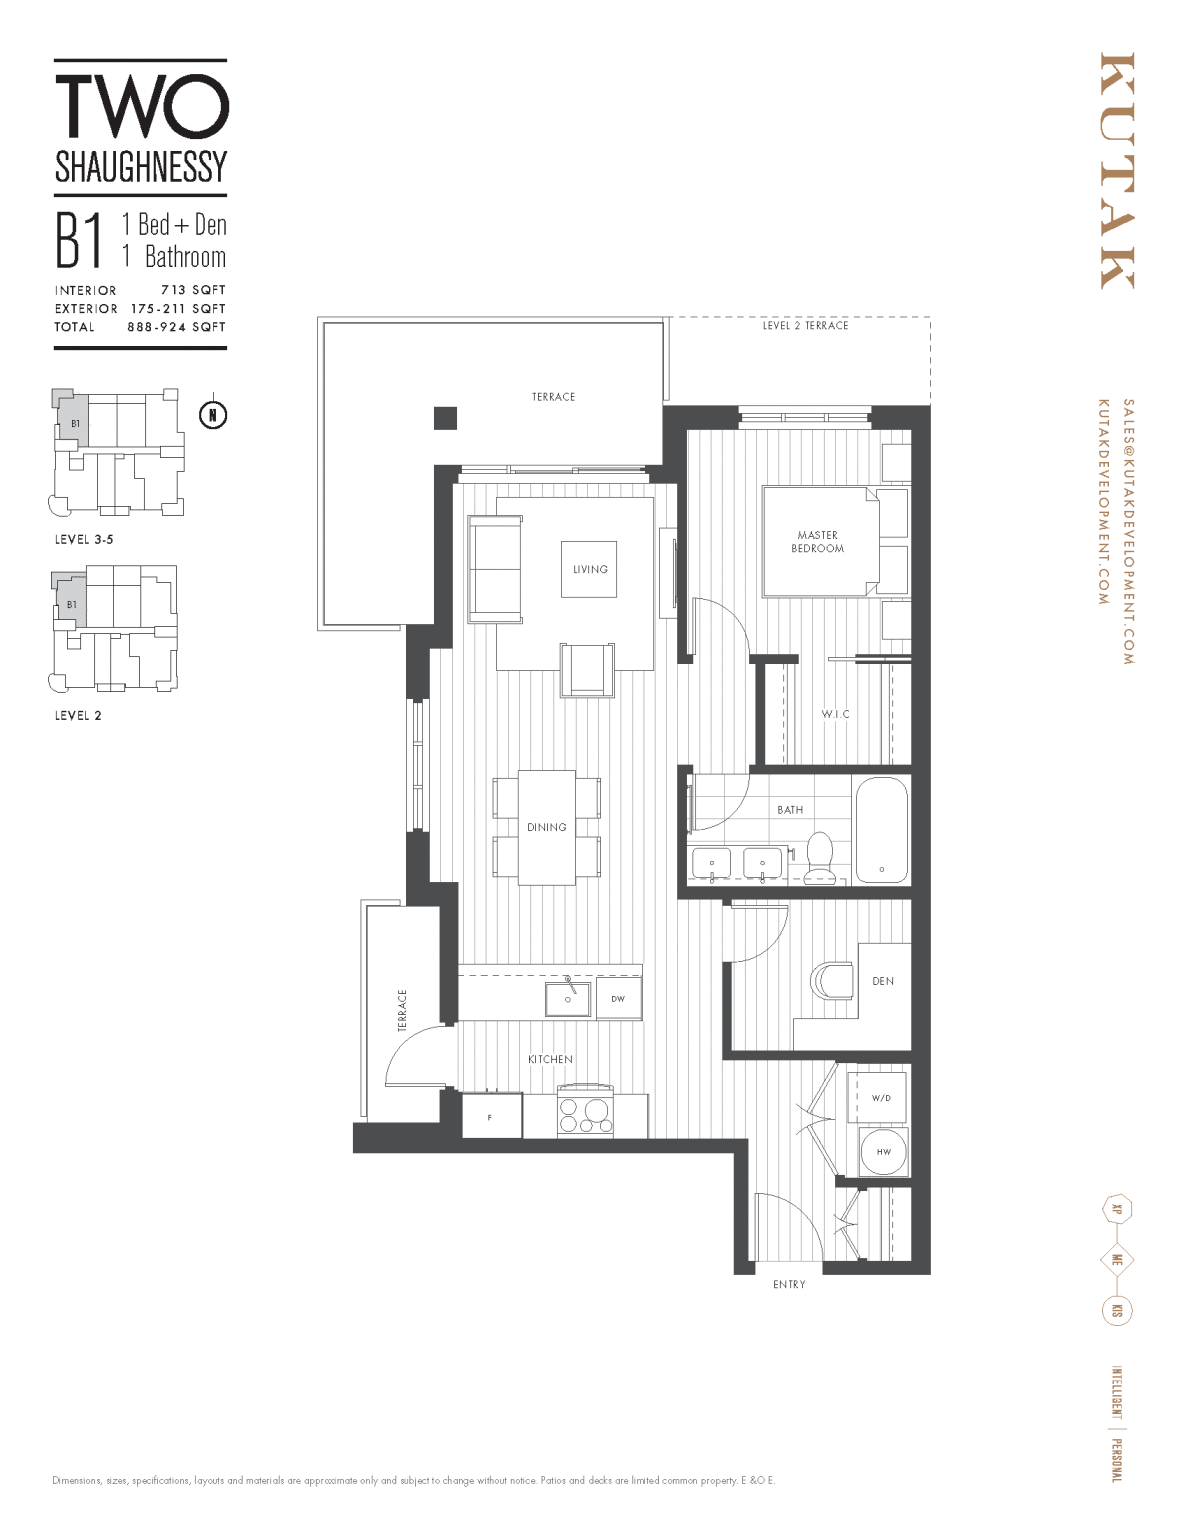 Two Shaughnessy Floor Plan B1